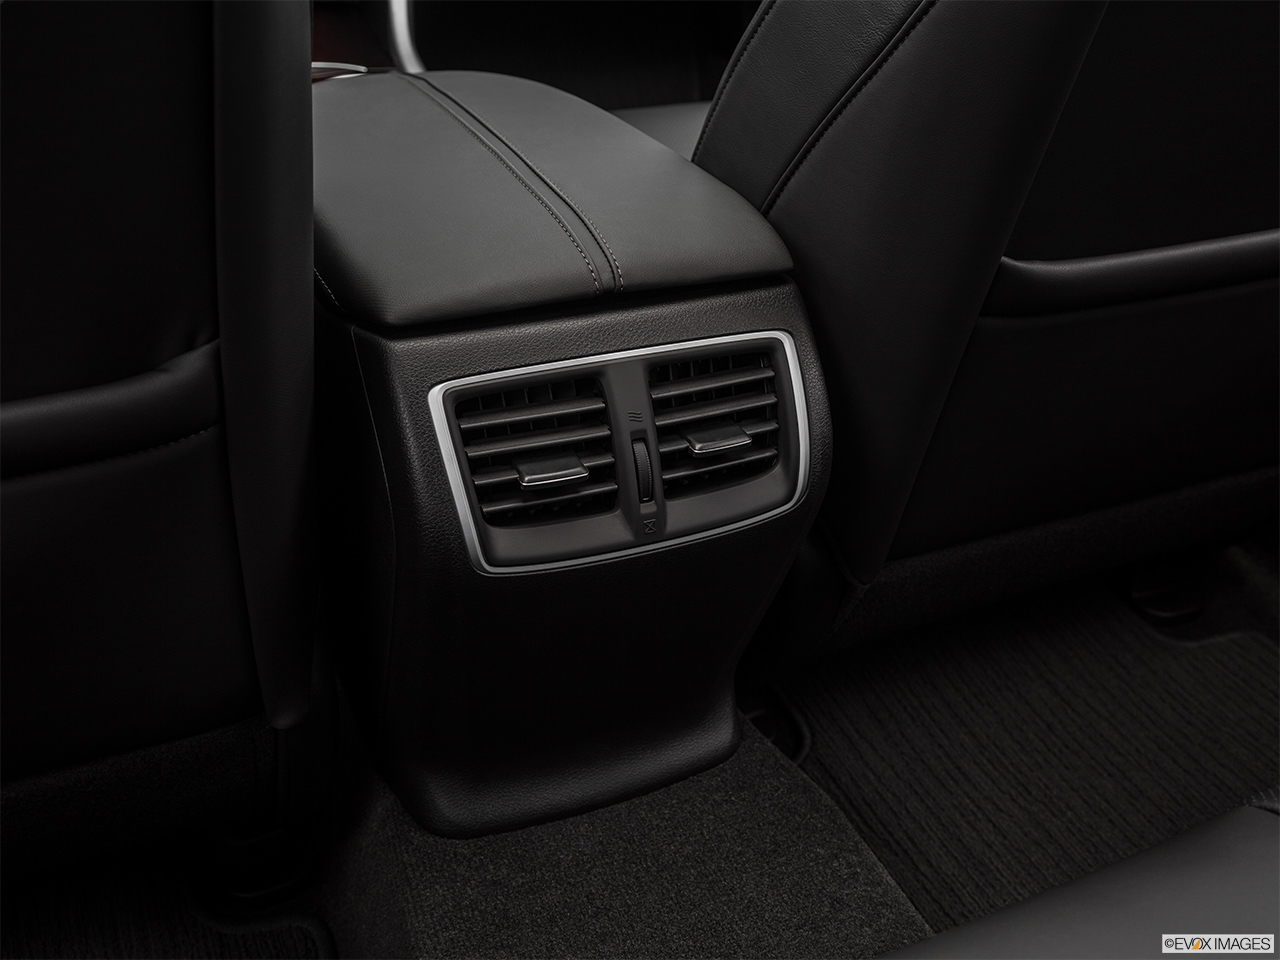 2017 Acura TLX 2.4 8-DCP P-AWS Rear A/C controls. 